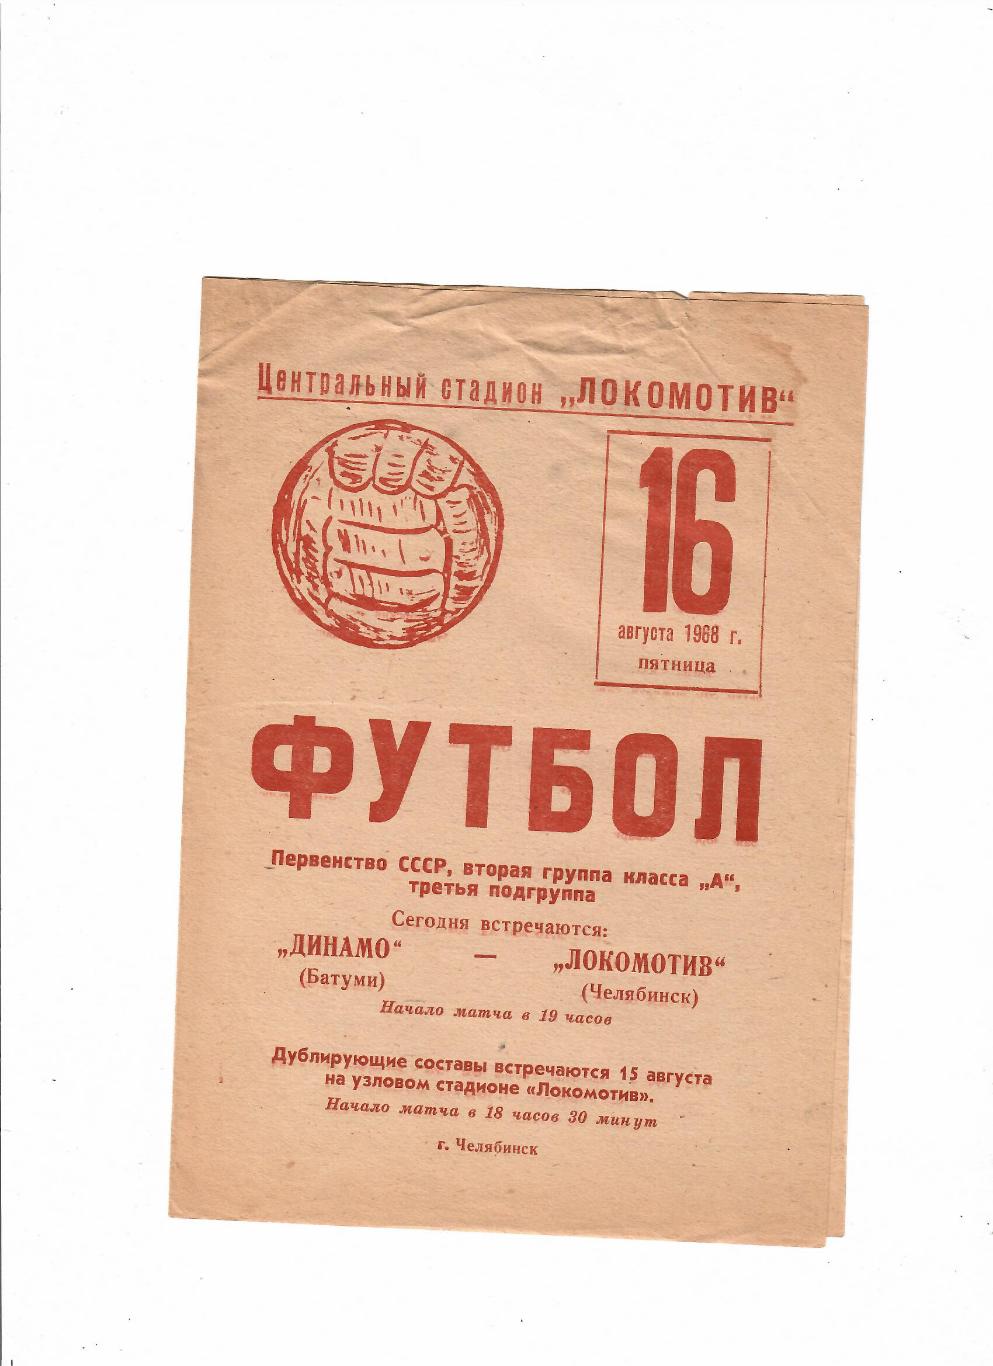 Локомотив Челябинск-Динамо Батуми 1968